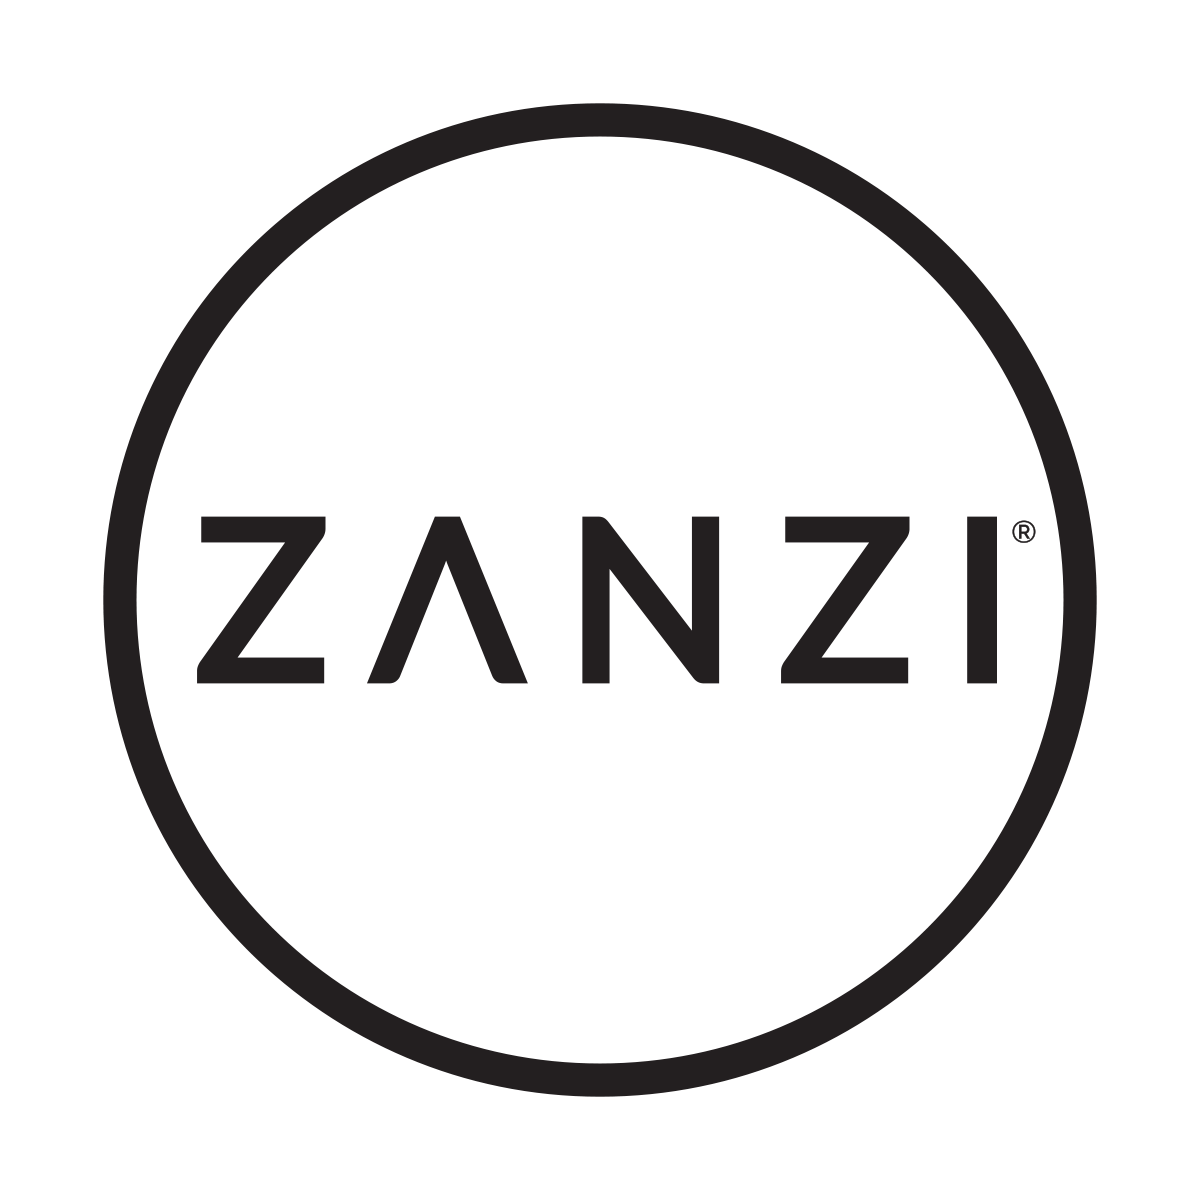 ZANZI_LOGO_BLACK_LR[75486]